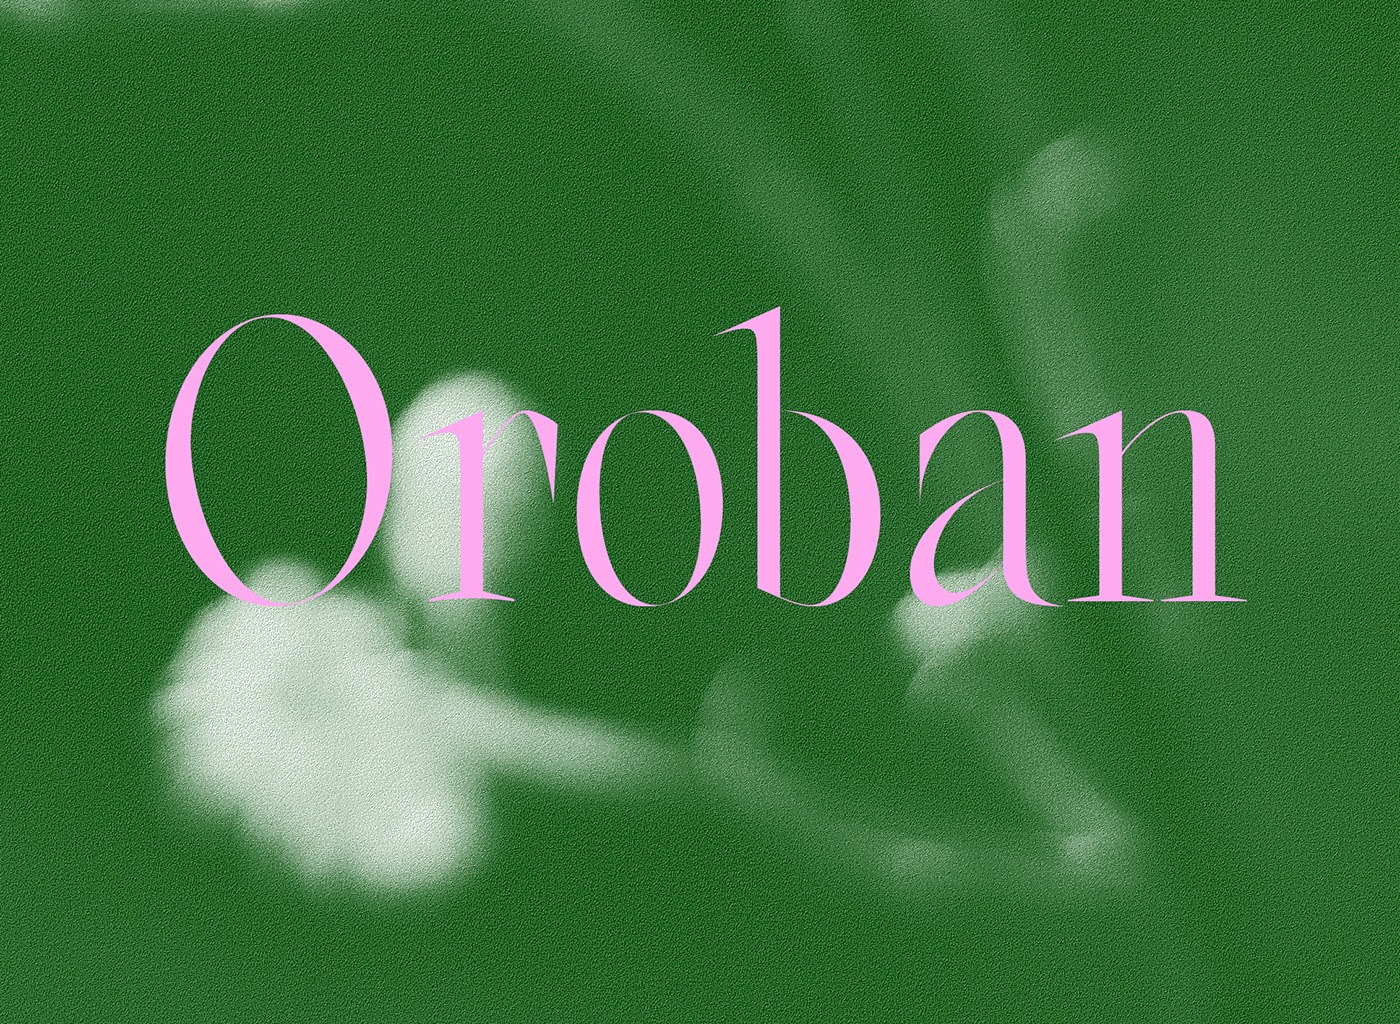 Oroban